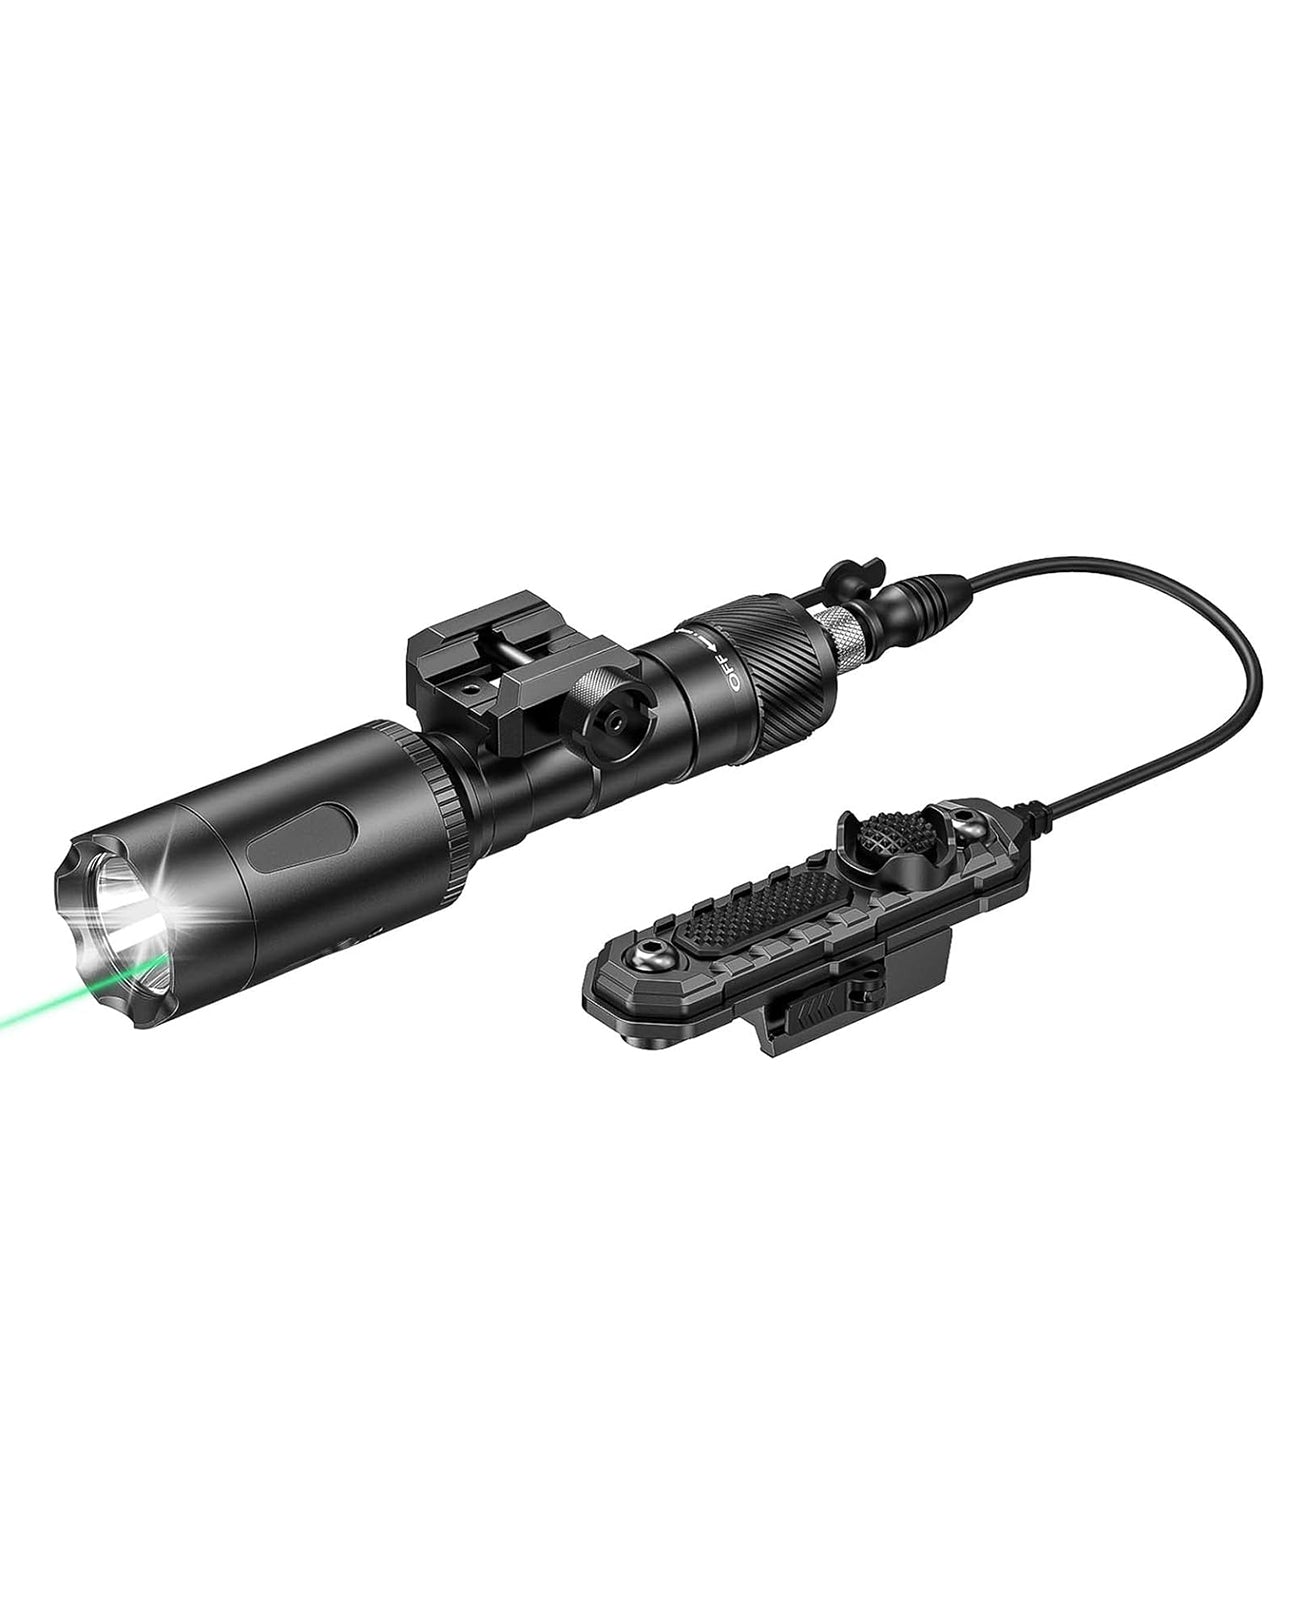 EZshoot Rifle Light 1000 Lumens Picatinny Flashlight Green Laser Light Combo